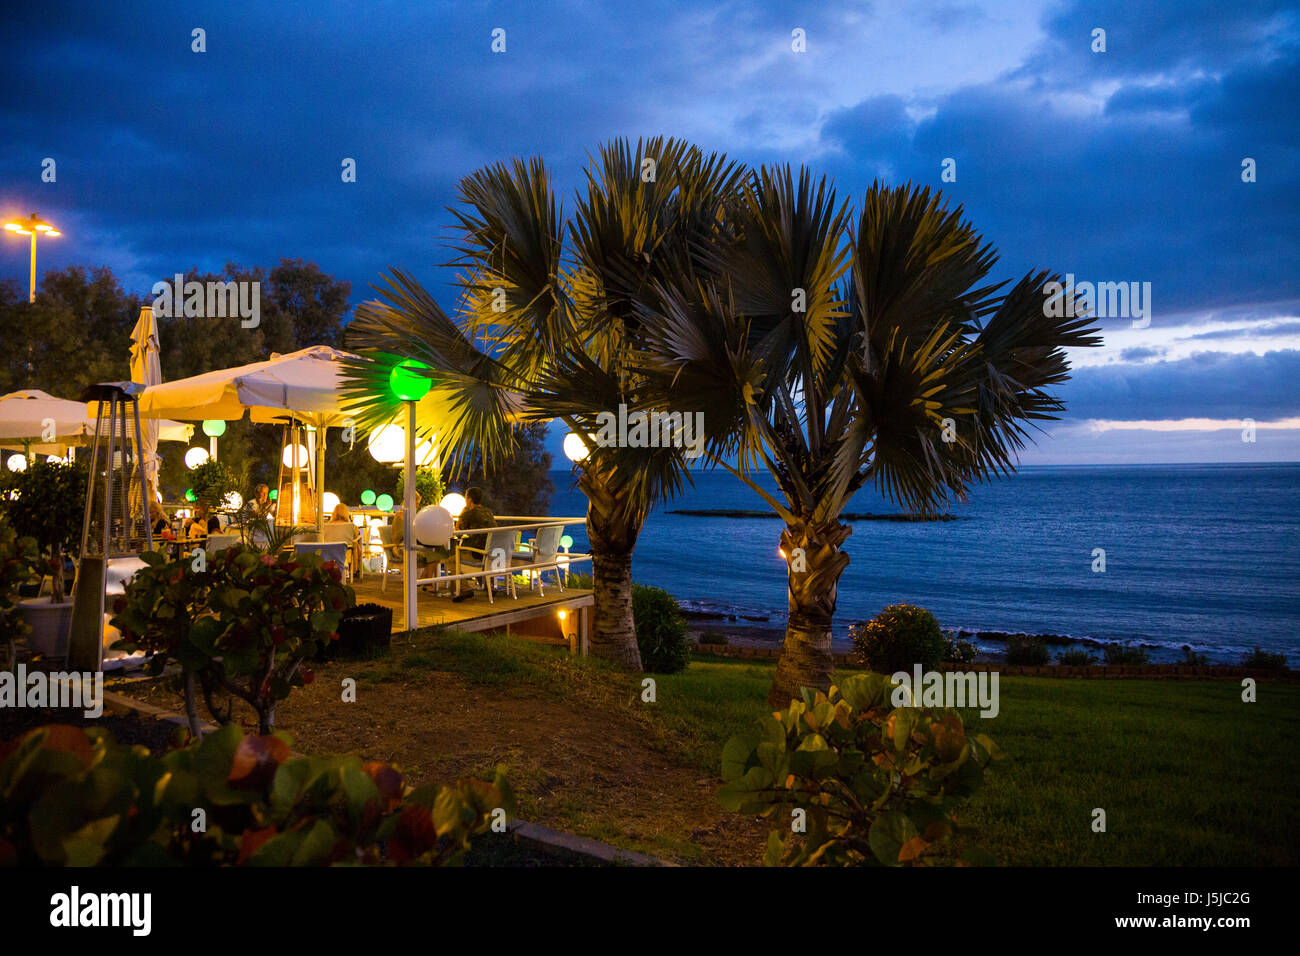 Restaurant looking out onto the Atlantic Ocean in Costa Adeje, Tenerife, Spain Stock Photo